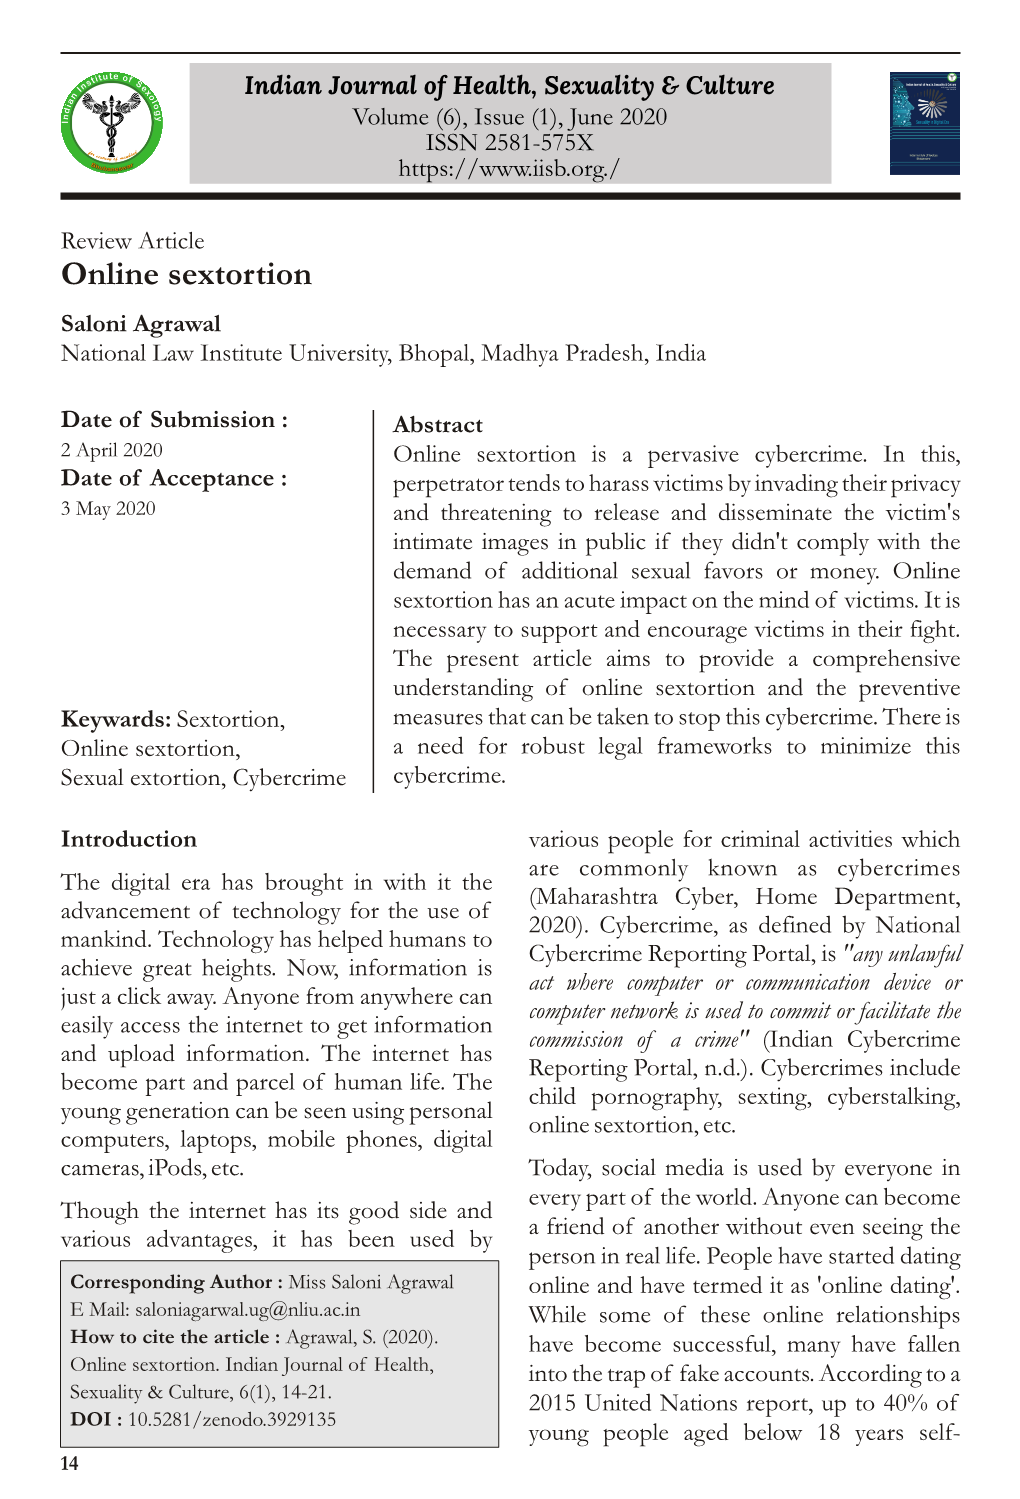 6. Online Sextortion